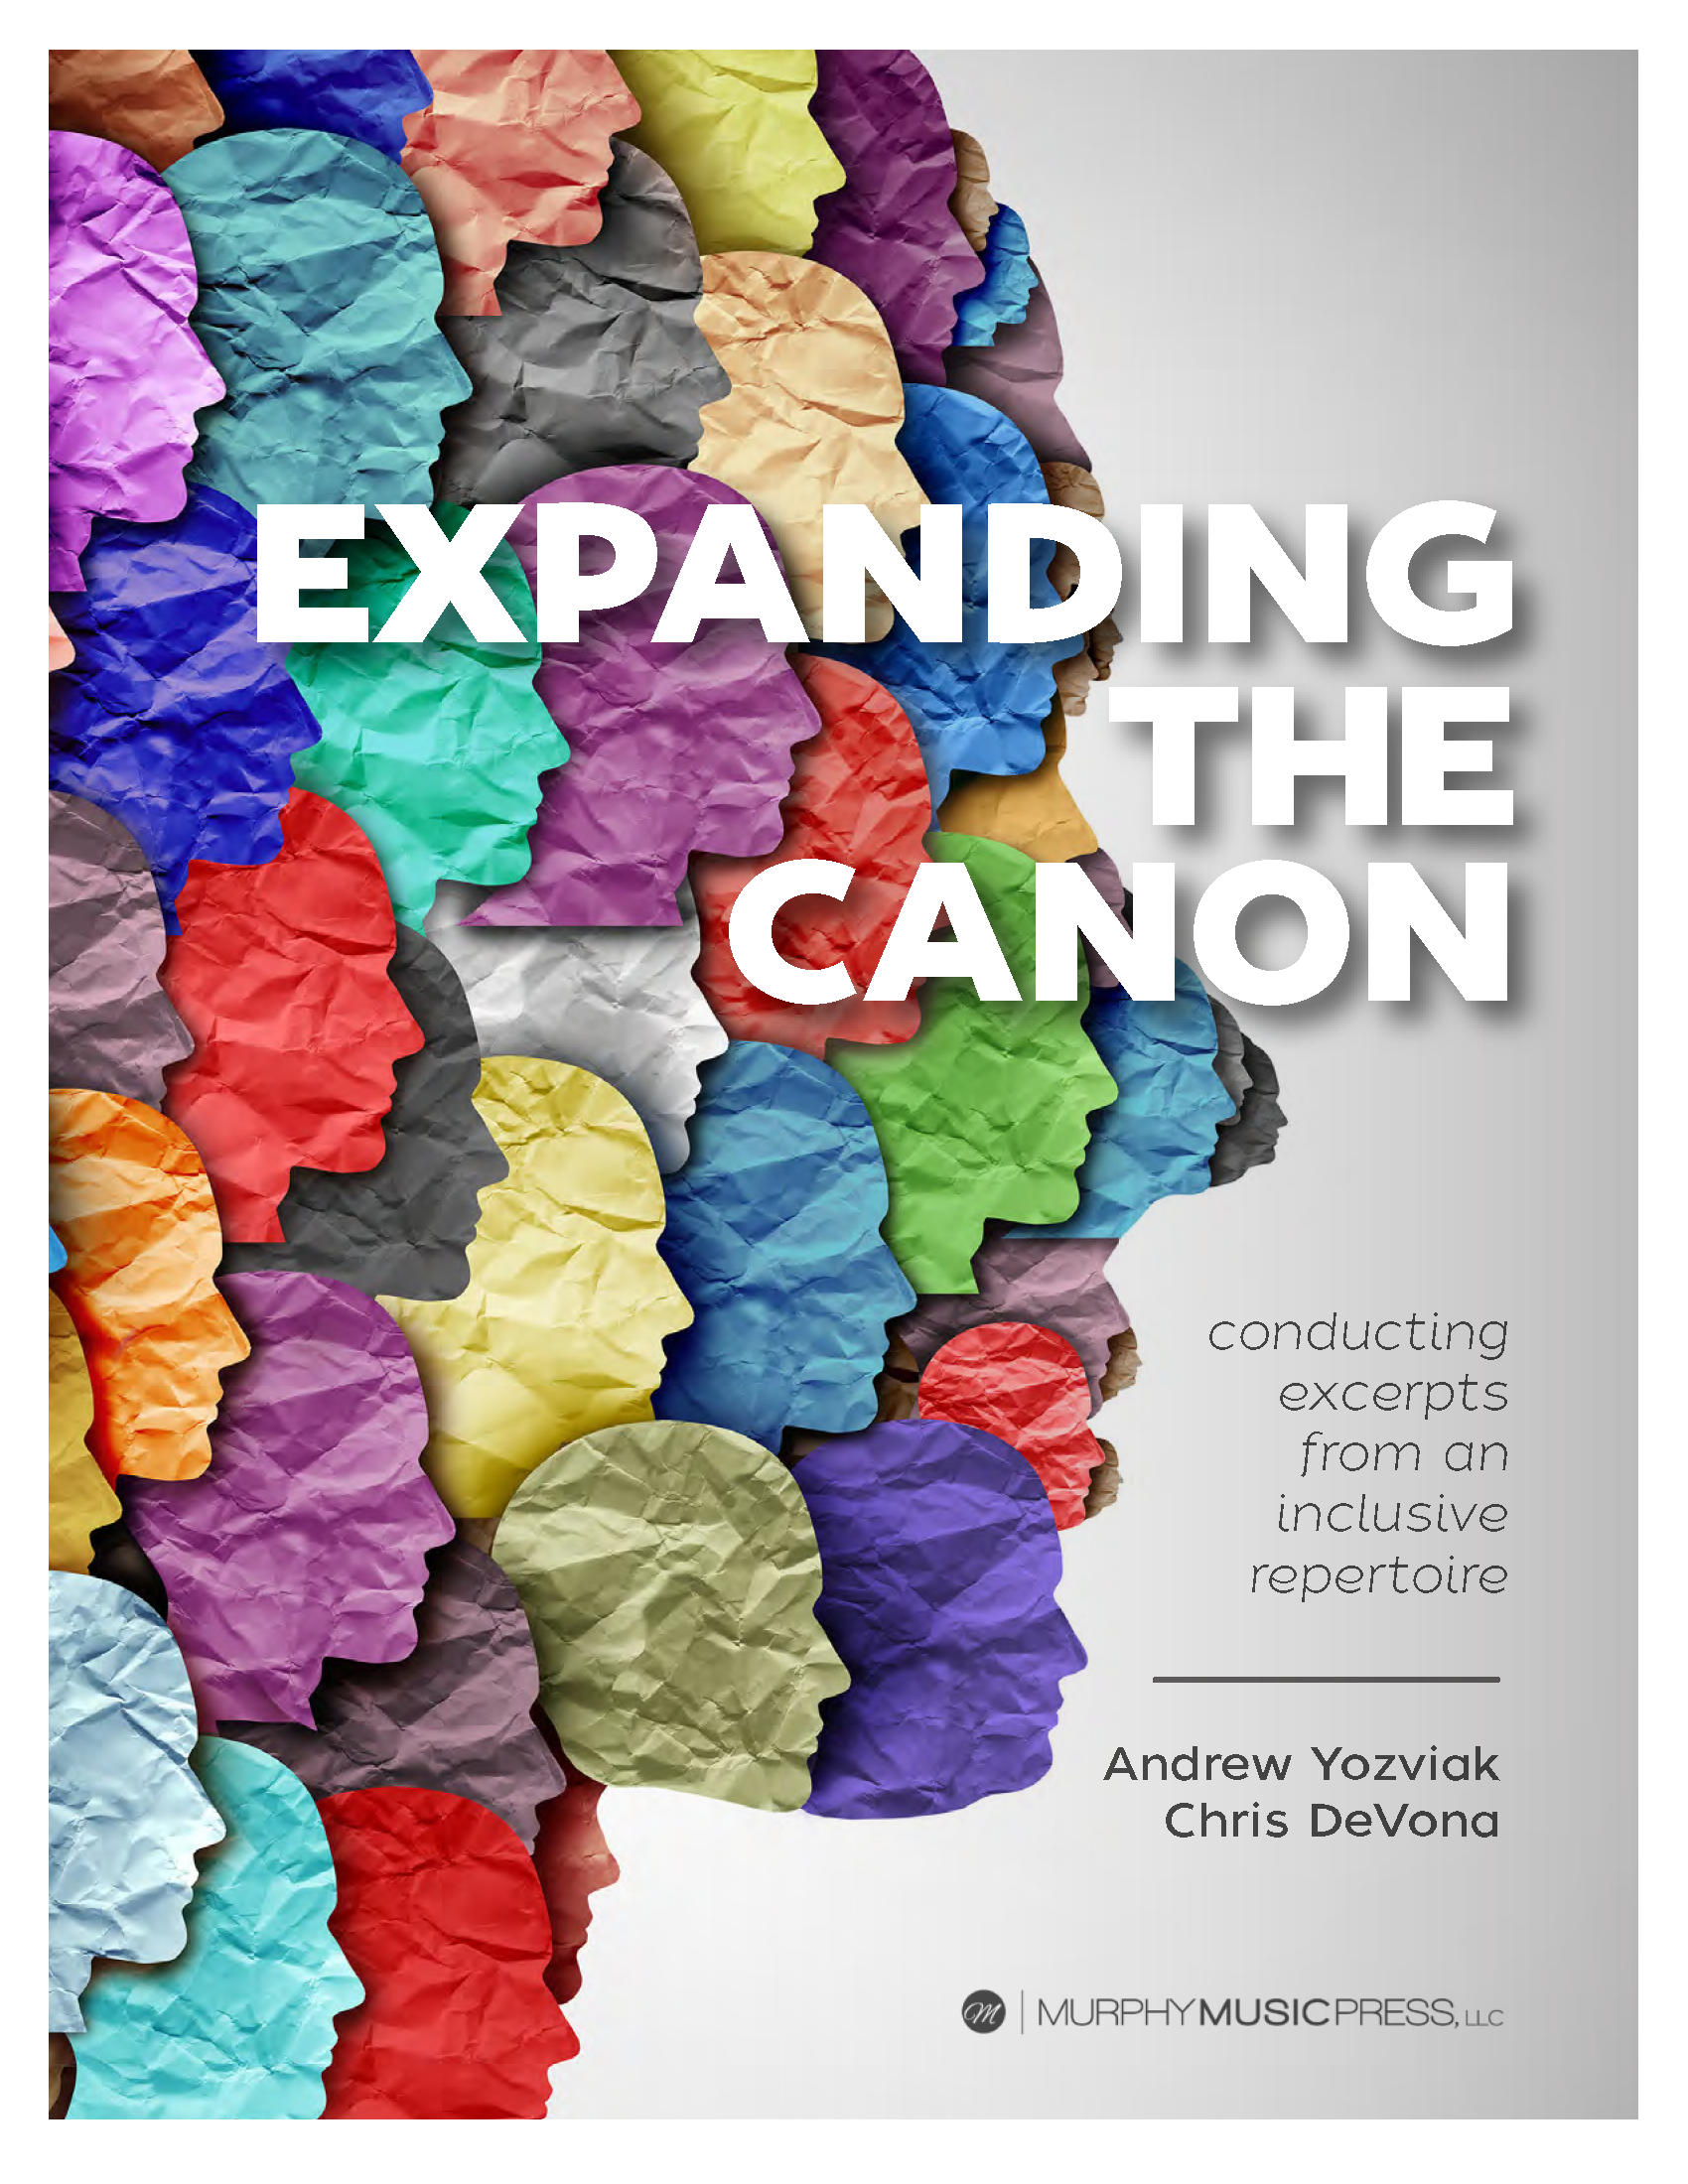 Expanding The Canon: Digital Parts by Andrew Yozviak and Chris DeVona